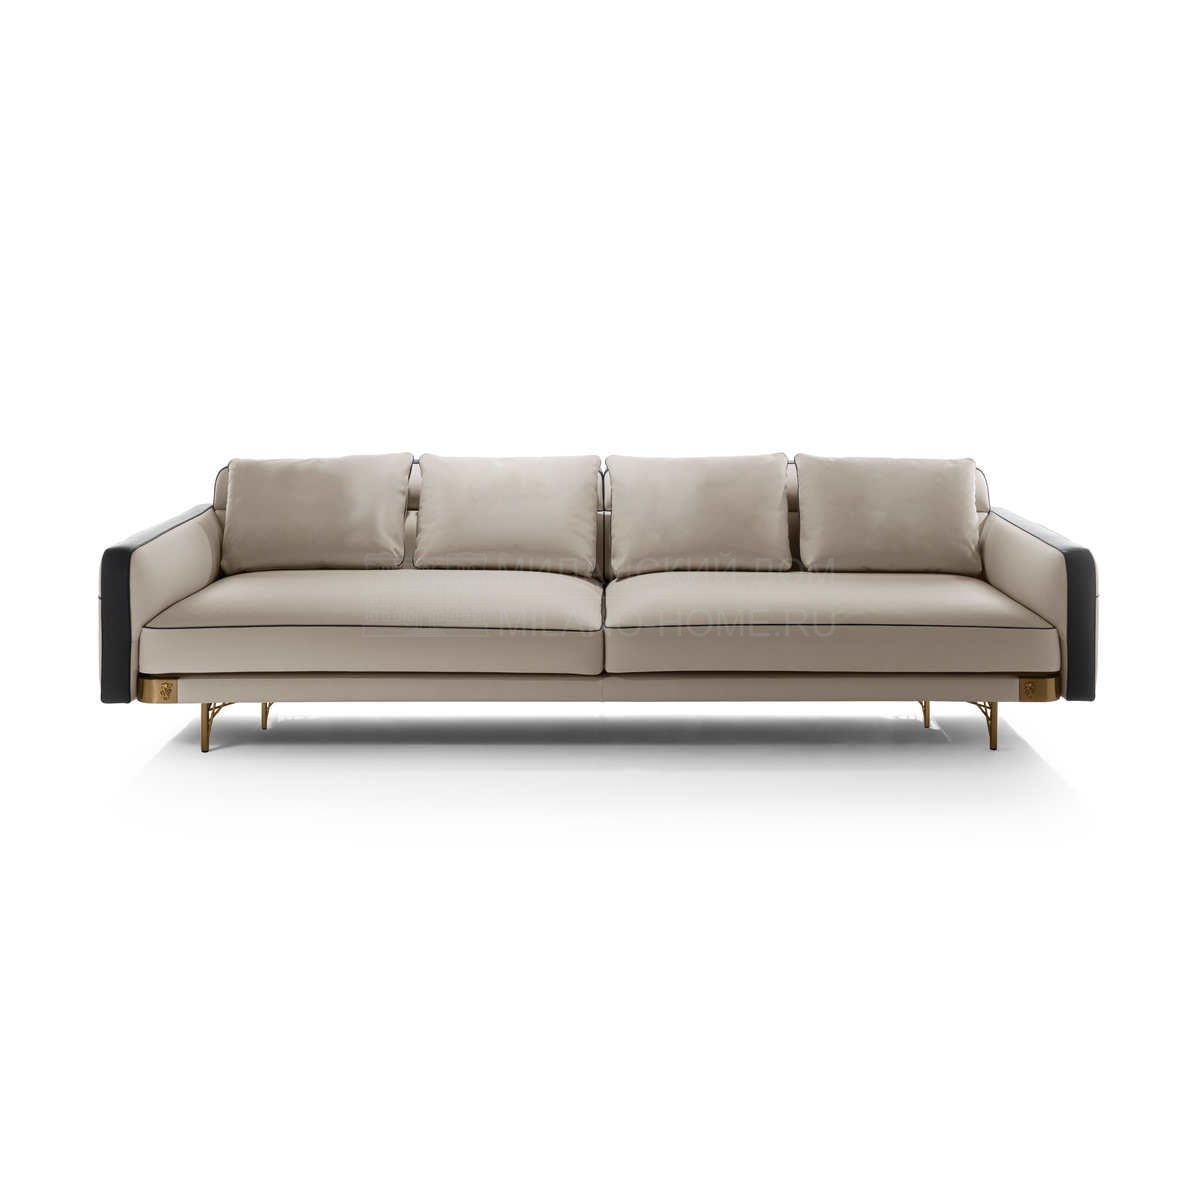 Прямой диван Memphis sofa из Италии фабрики IPE CAVALLI VISIONNAIRE